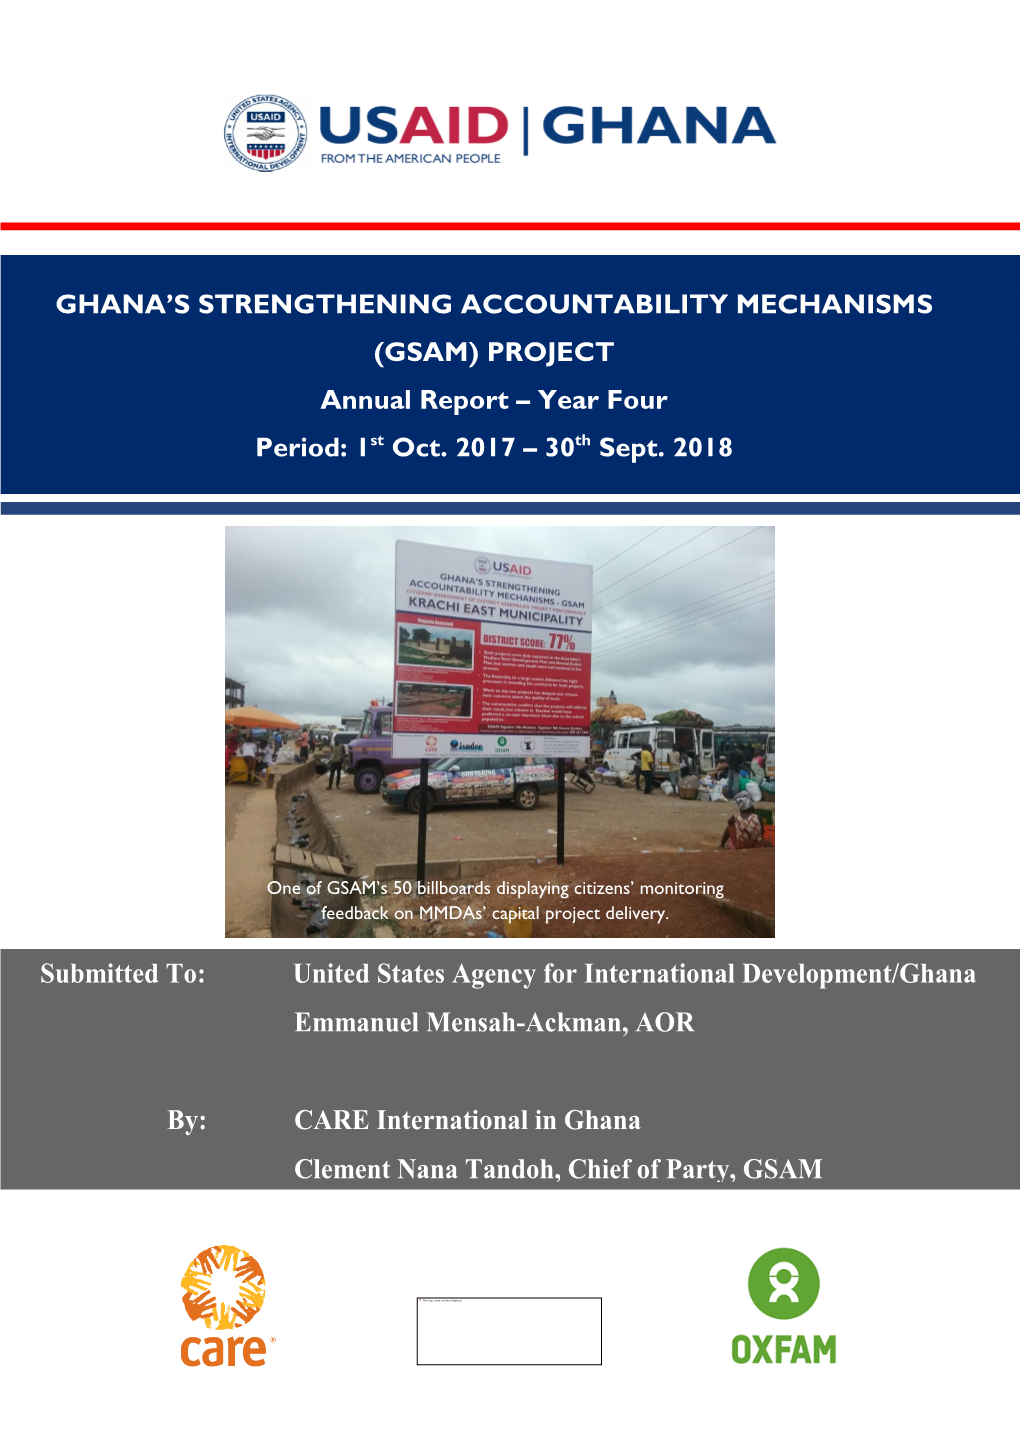 United States Agency for International Development/Ghana Emmanuel